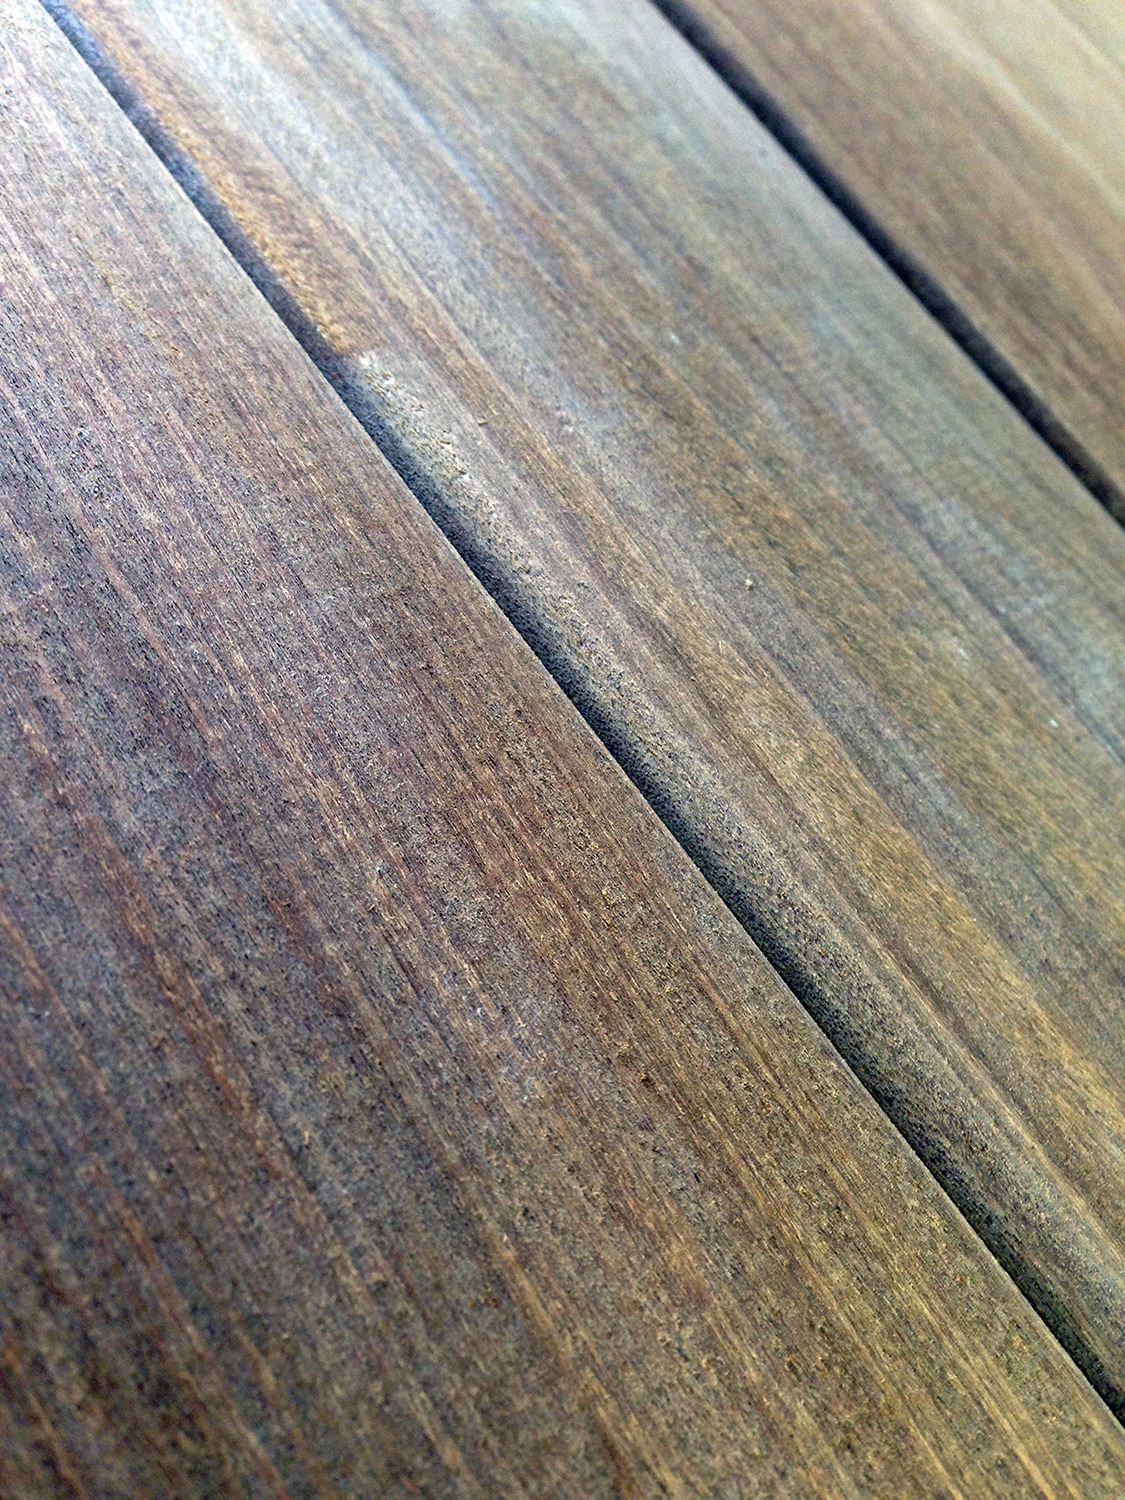 iron-woods-ipe-hardwood-decking-close-up